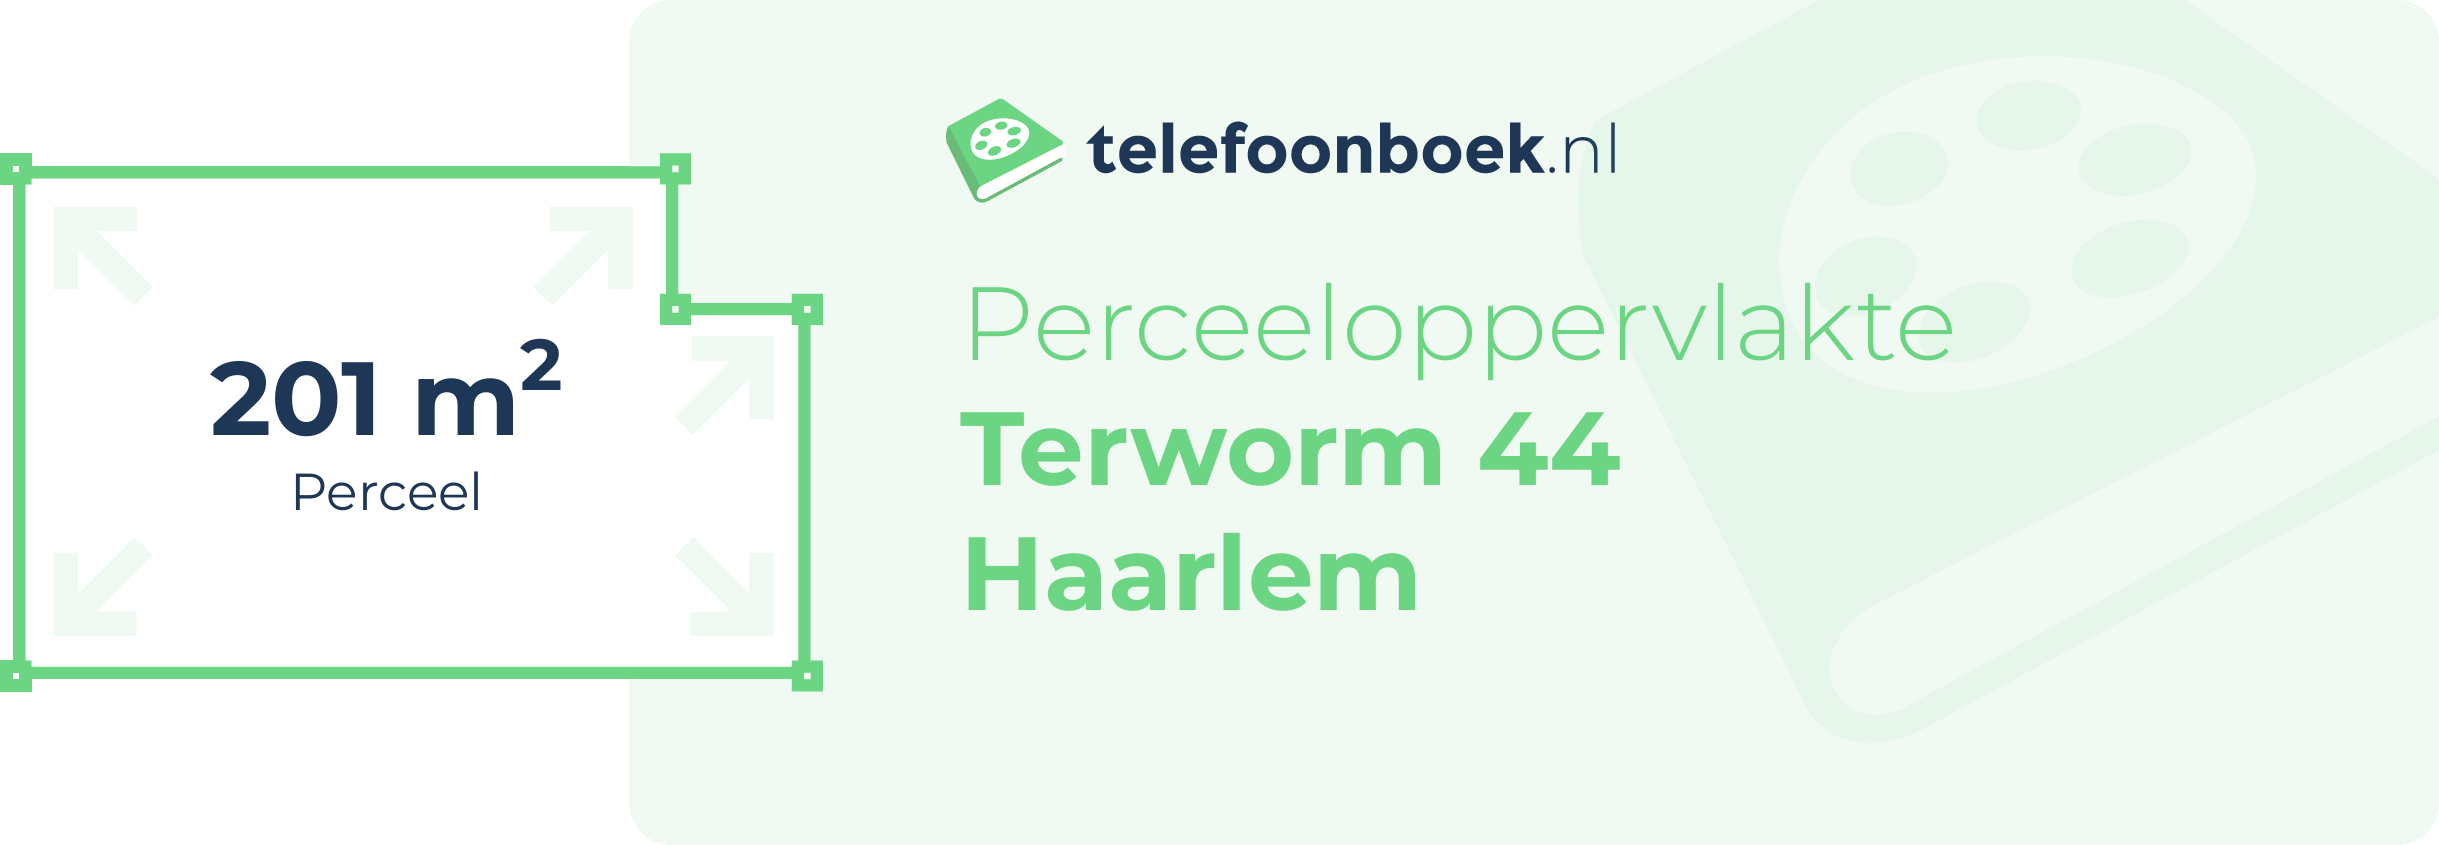 Perceeloppervlakte Terworm 44 Haarlem